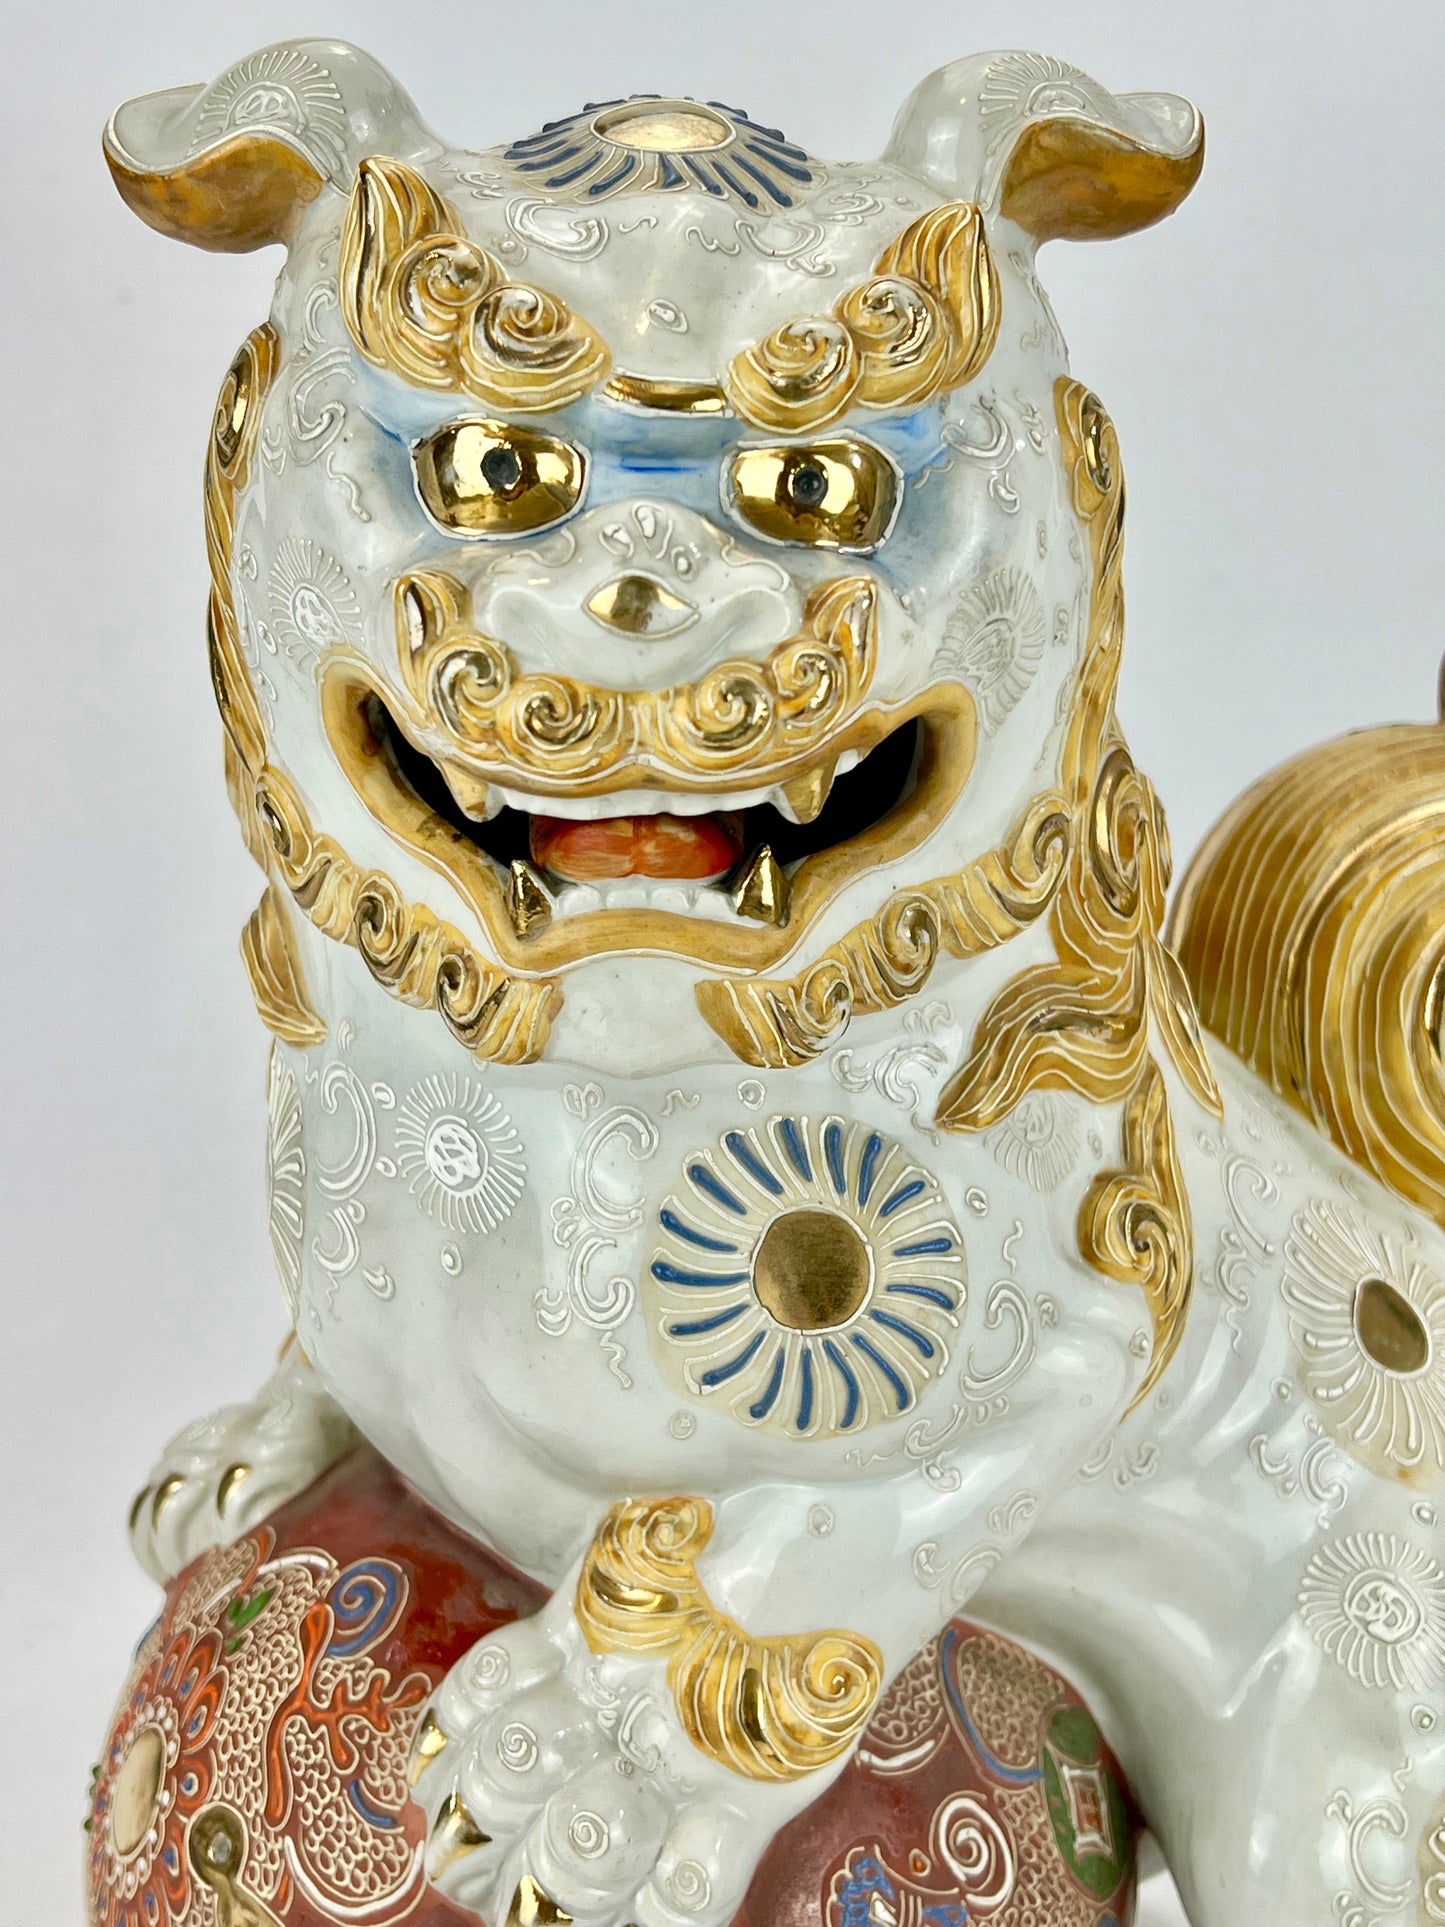 Vintage Japanese Kutani Cermic ShiShi Temple Lion Foo Dog Statue 13”